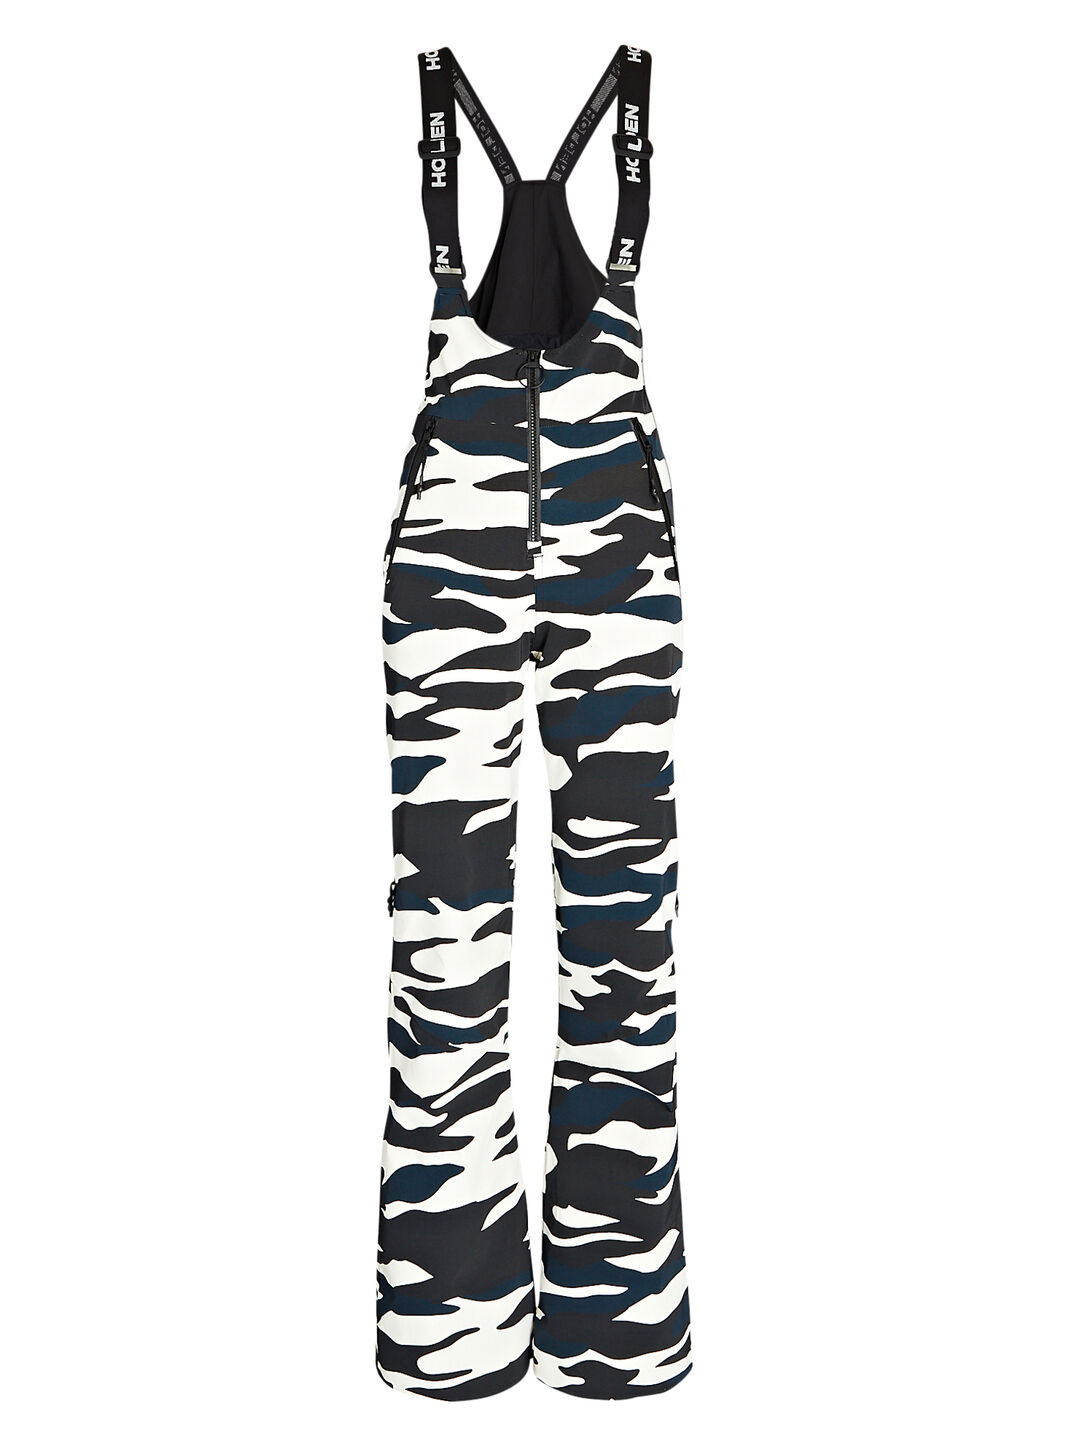 Zebra-Printed Bib Snow Pants